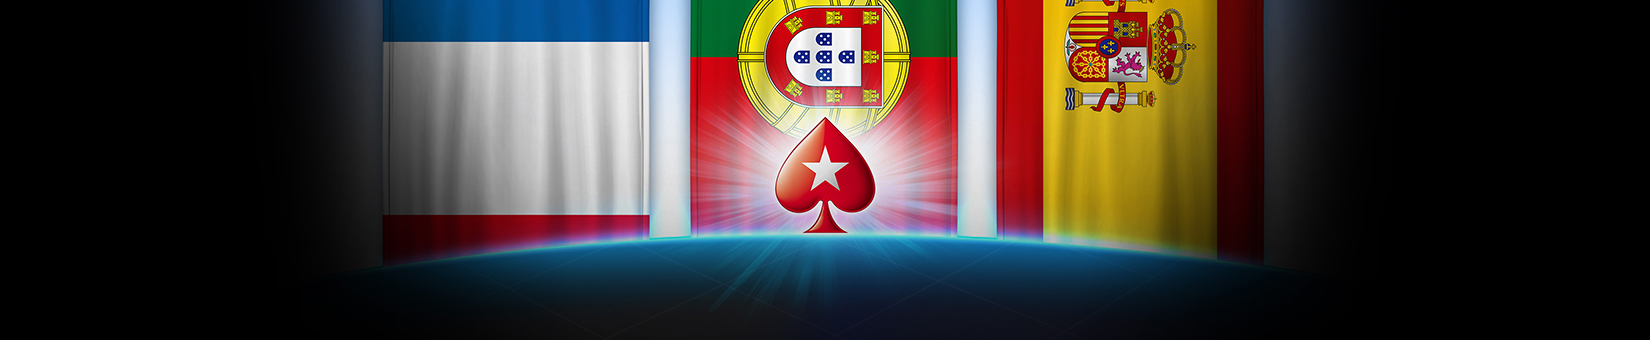 euro casino slots